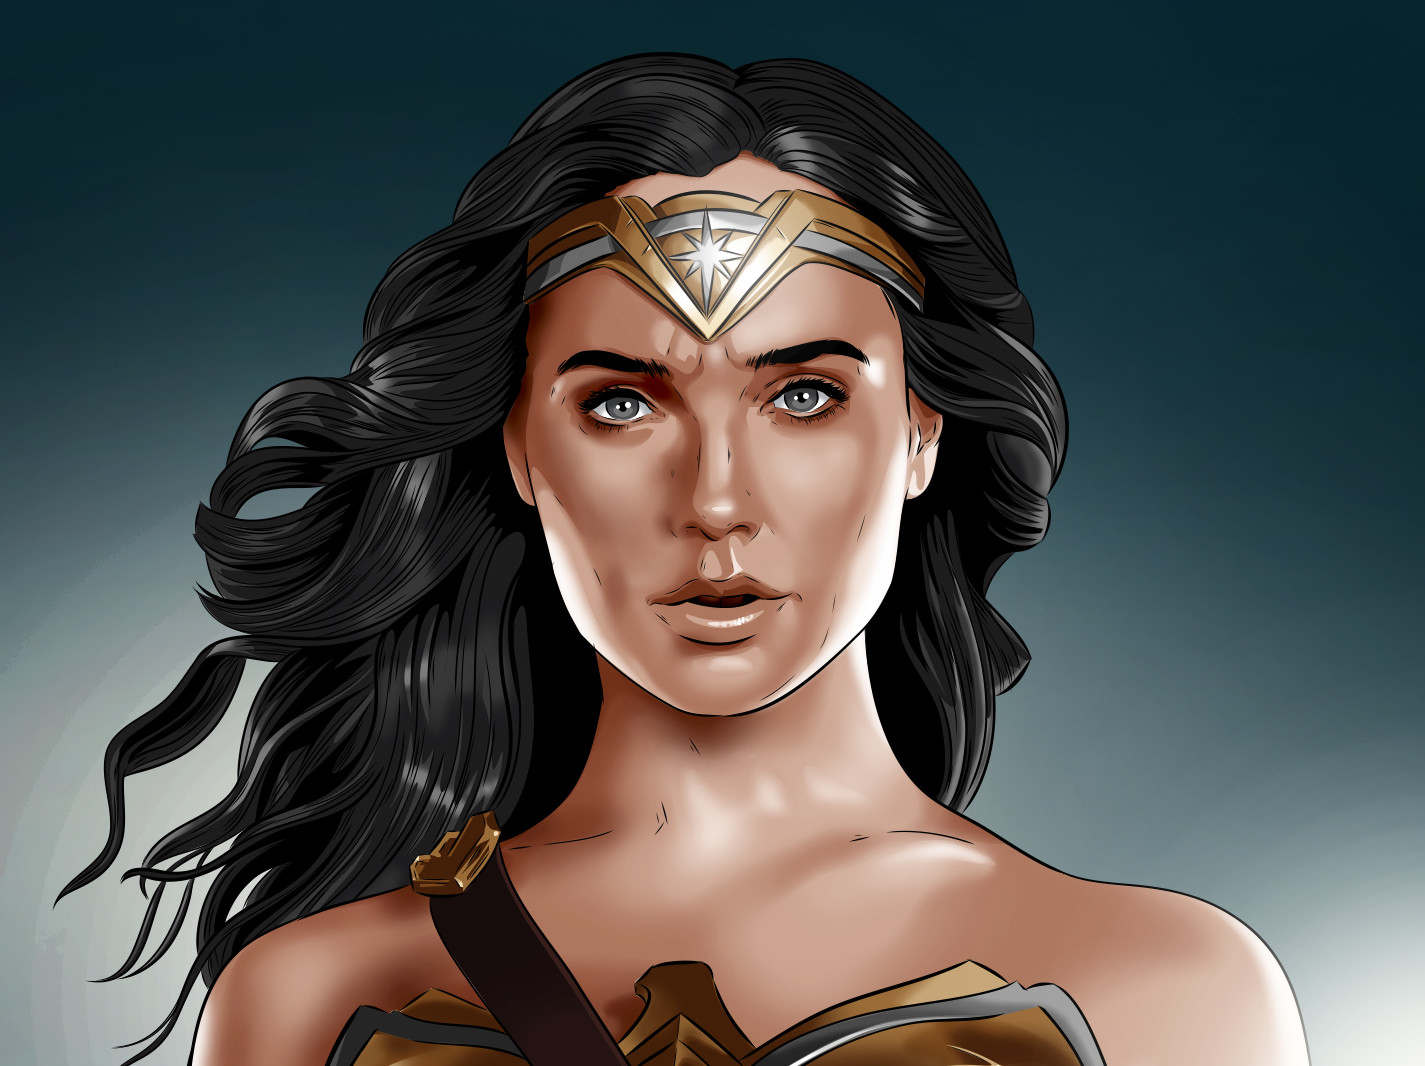 ArtStation - Wonder Woman: Justice League, Vassilis Dimitros